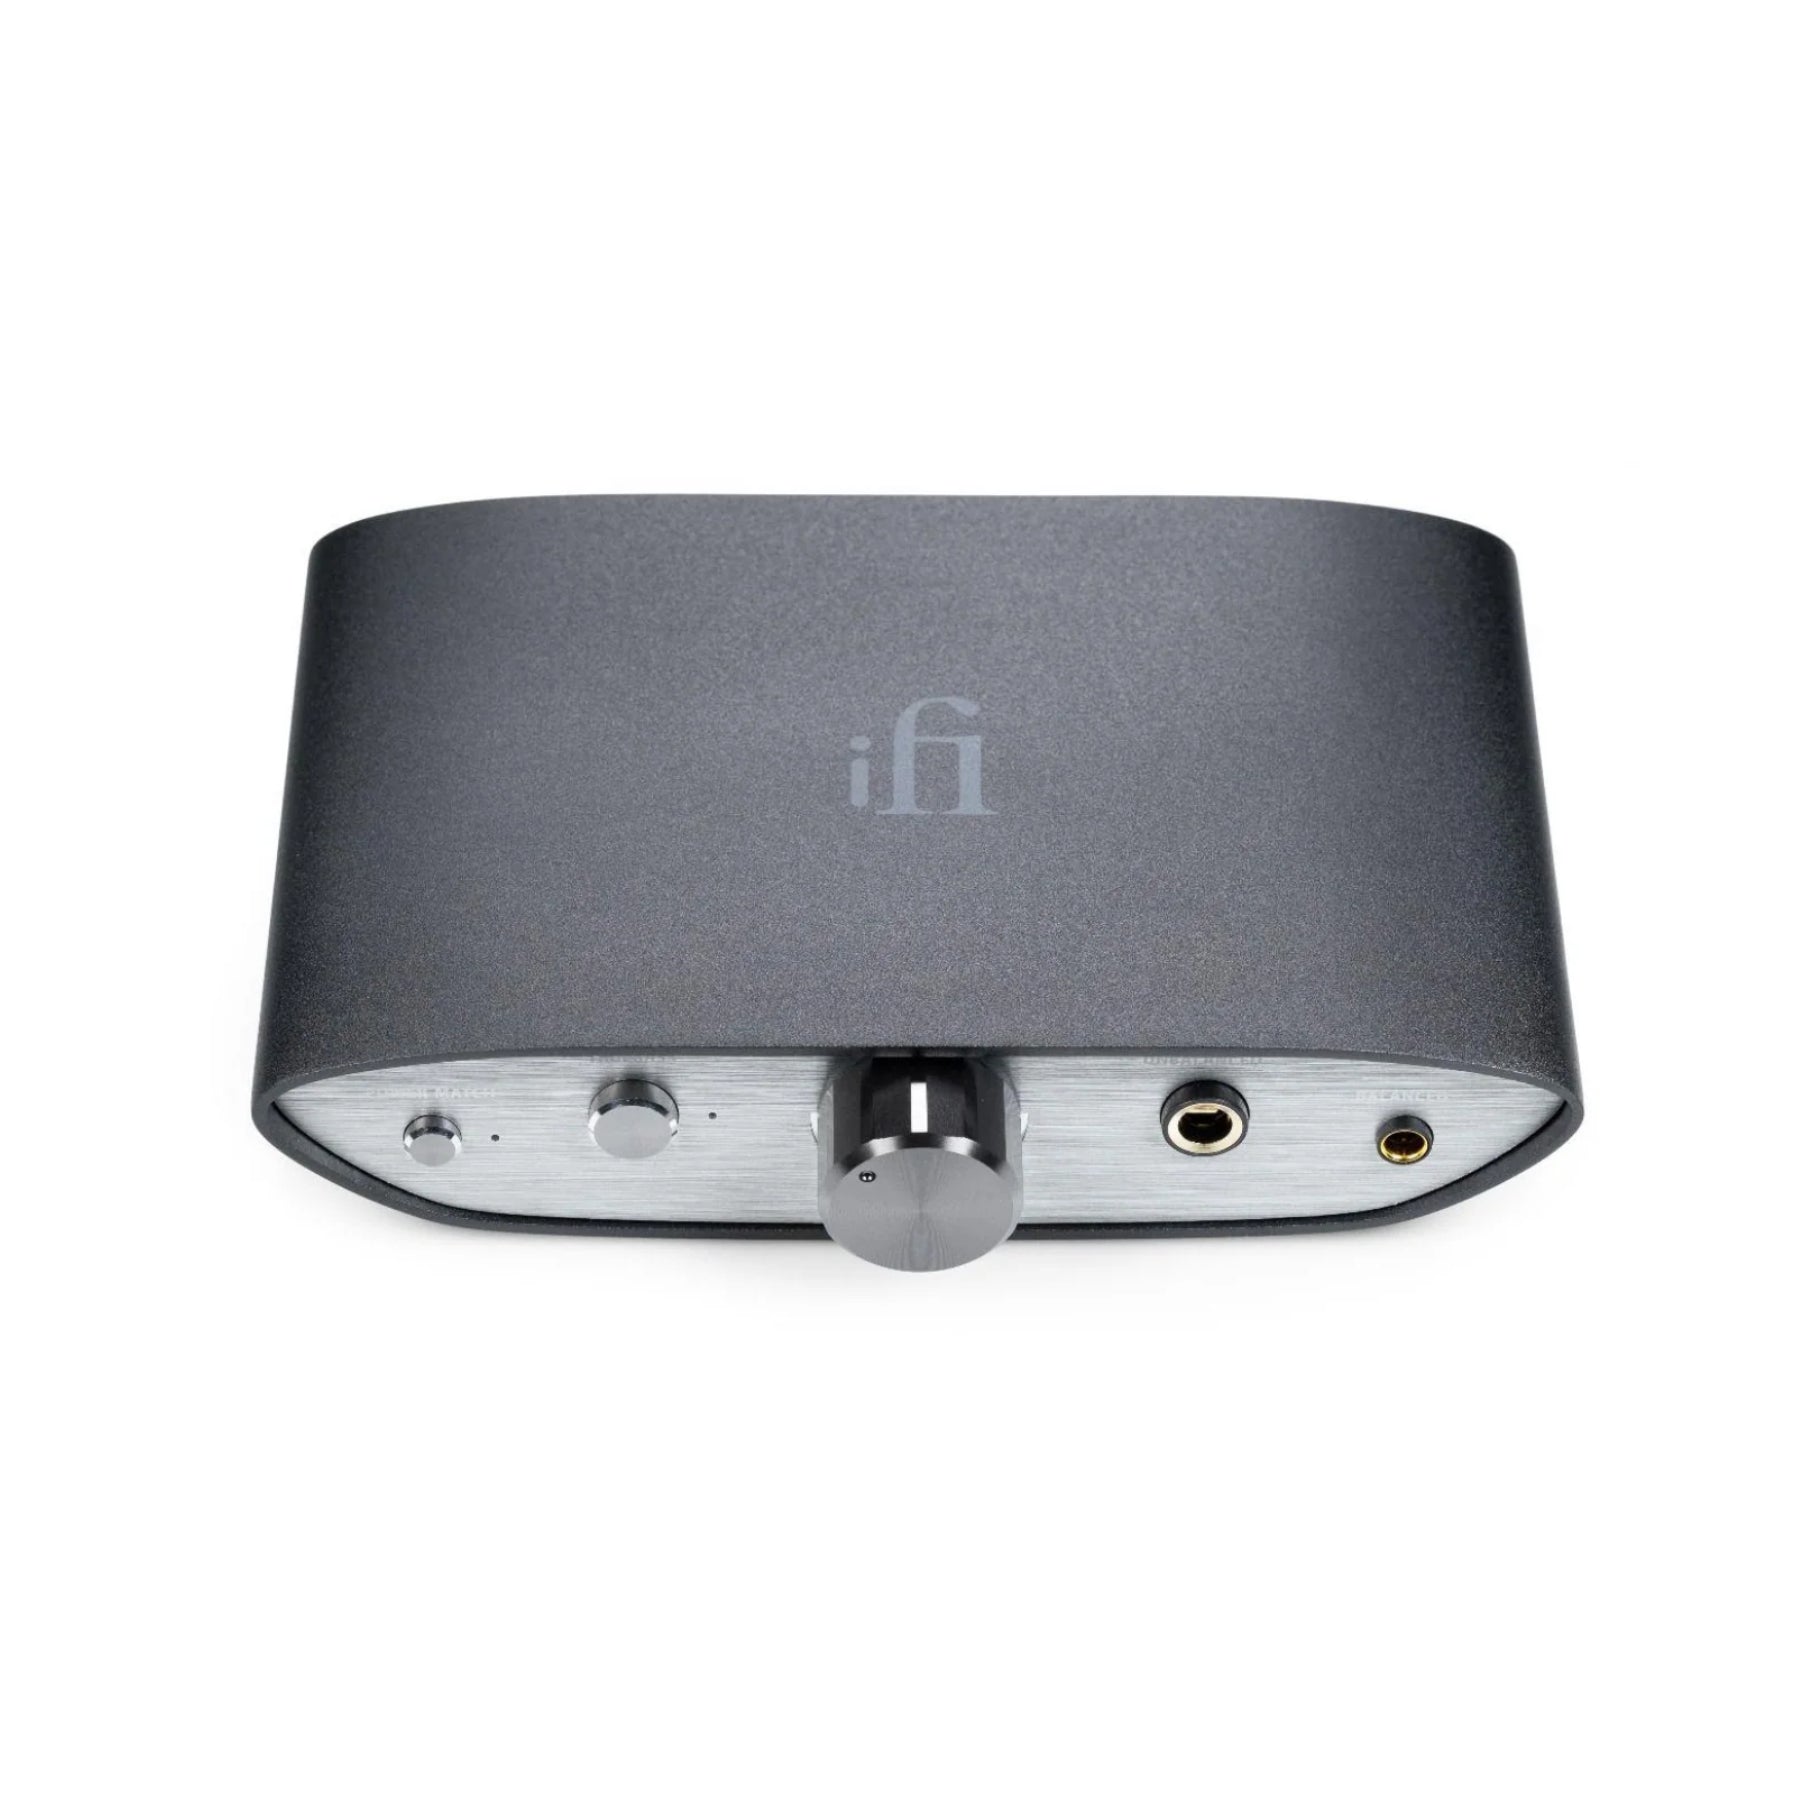  iFi Zen DAC V2 Desktop Digital Analog Converter with iFi  SilentPower iPower2 - Low Noise DC Power Supply 5V : Electronics